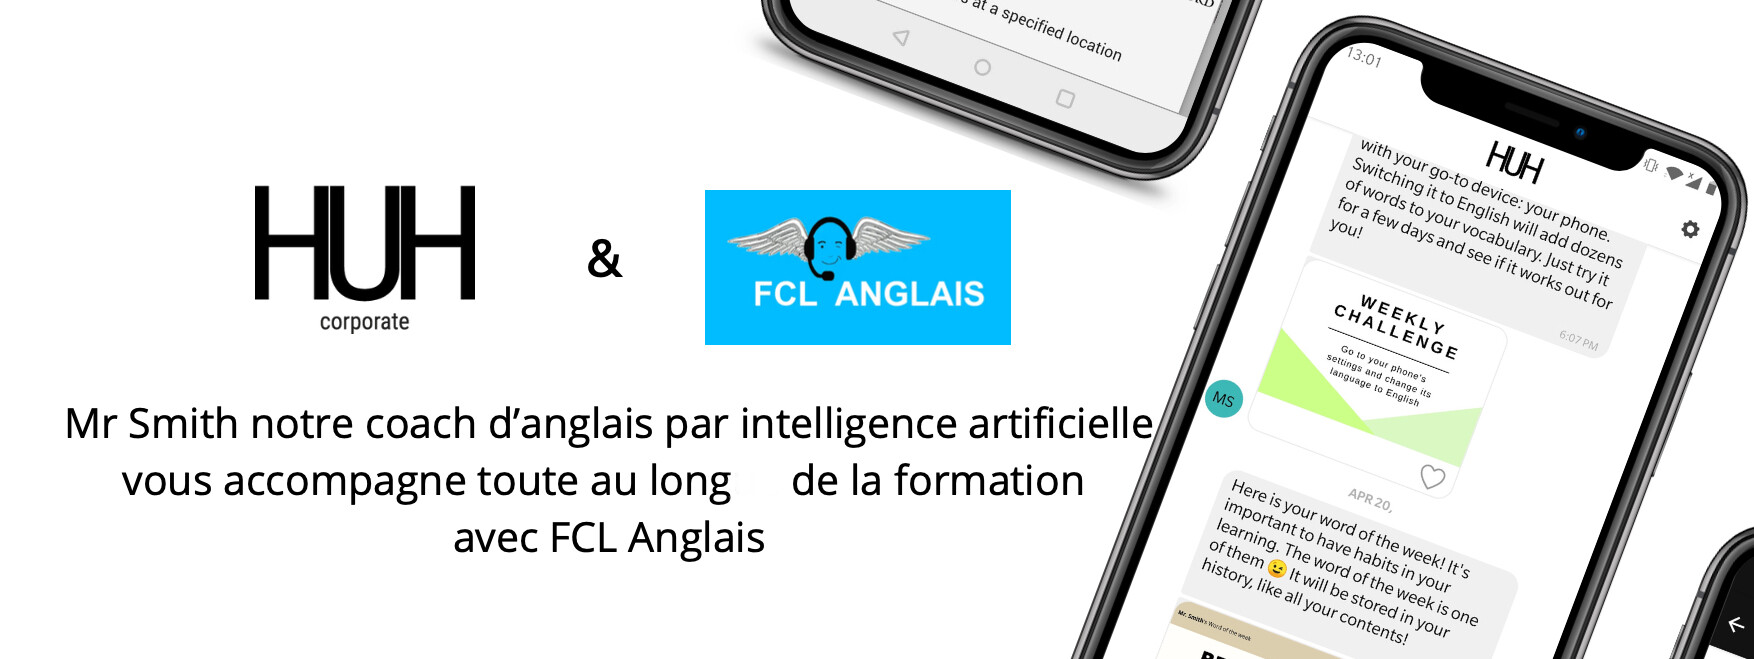 HUH Corporate Mr Smith FCL ANGLAIS tutorat intelligence artificielle formation application partenariat partenaires